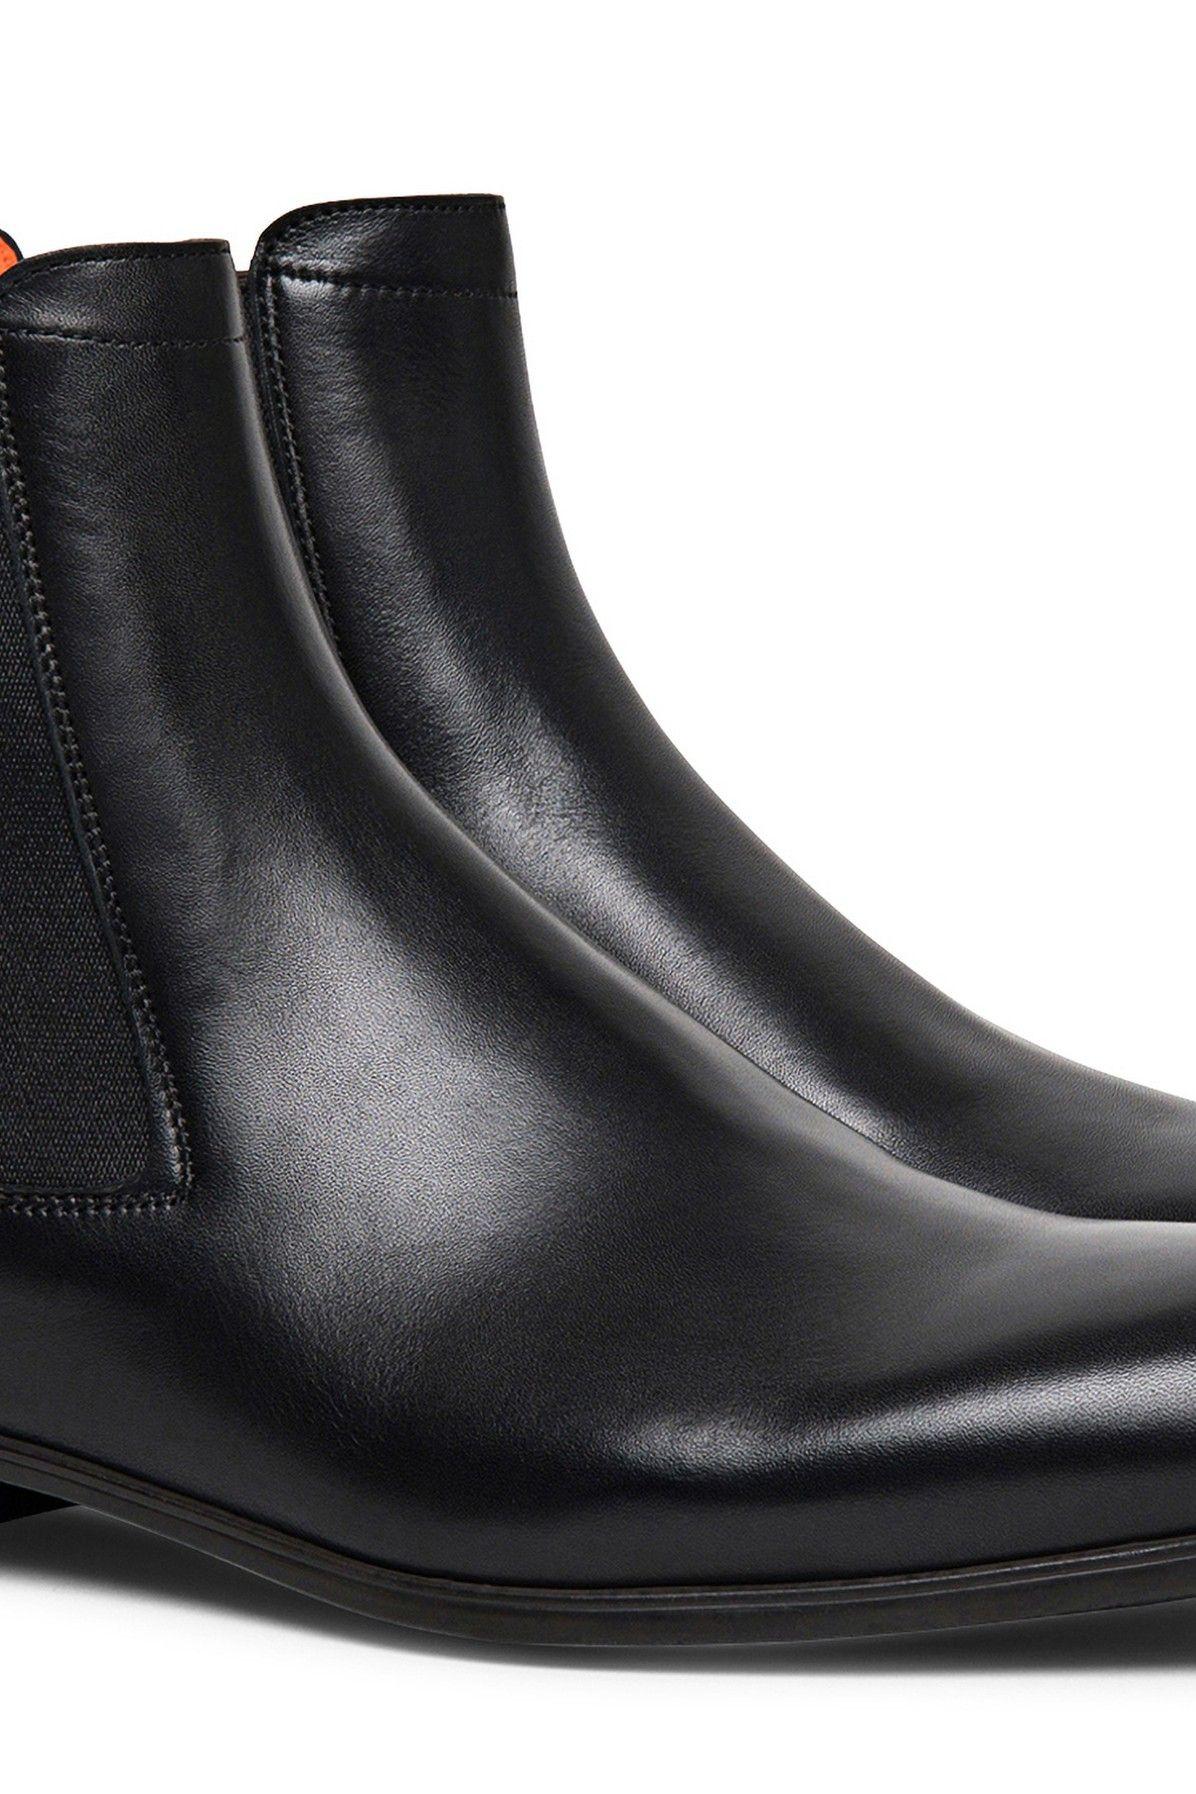 Santoni Leather Chelsea Boots in Black for Men | Lyst